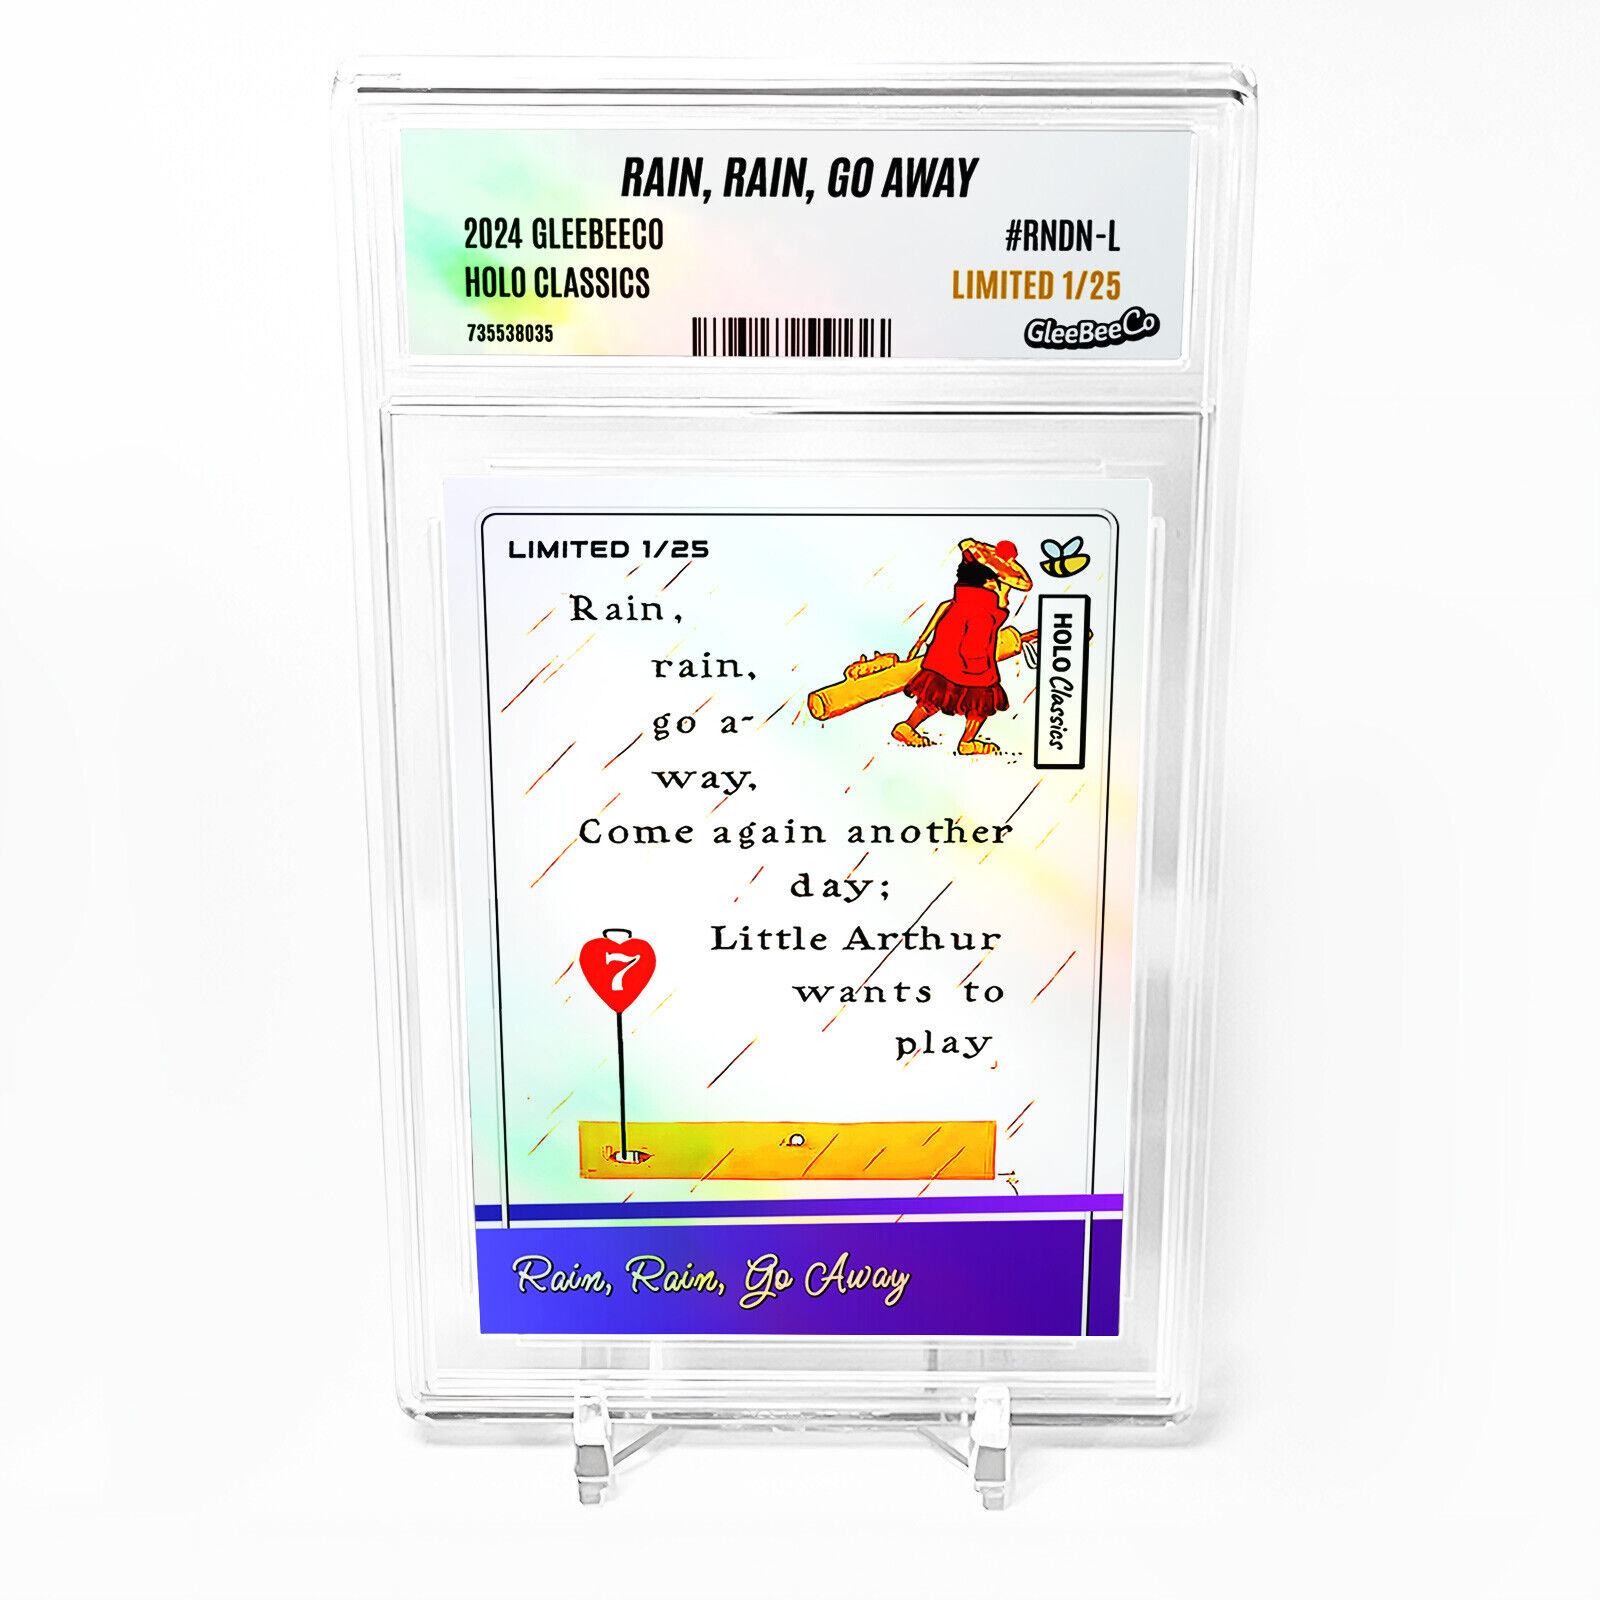 RAIN, RAIN, GO AWAY Card 2024 GleeBeeCo Holo Classics Slabbed #RNDN-L Only /25